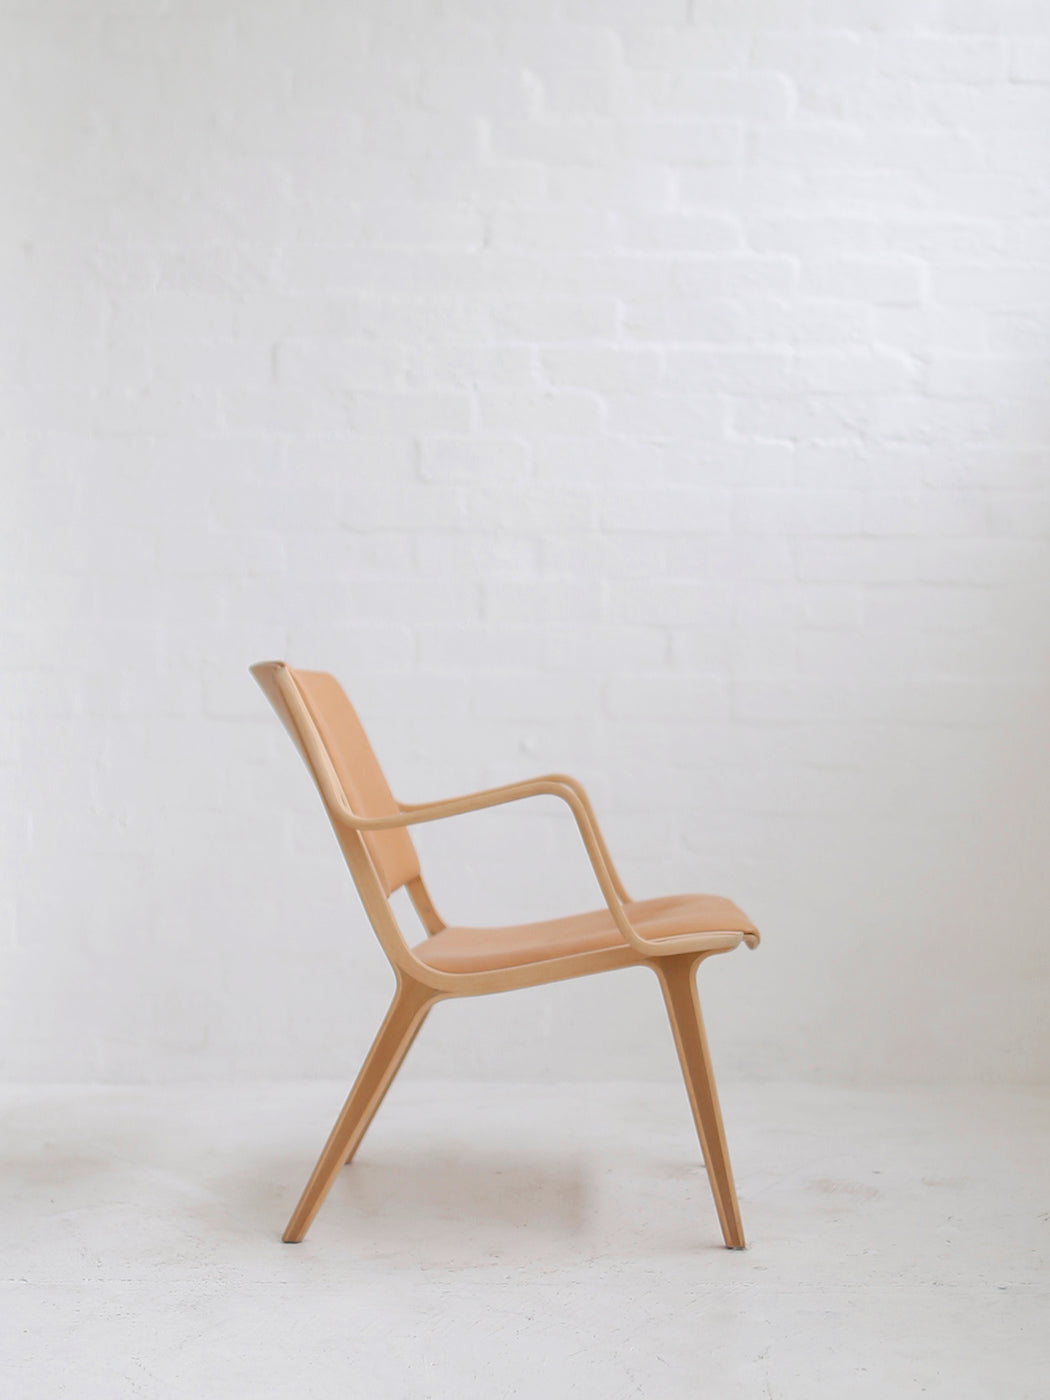 Hvidt & Mølgaard 'Ax' Chair